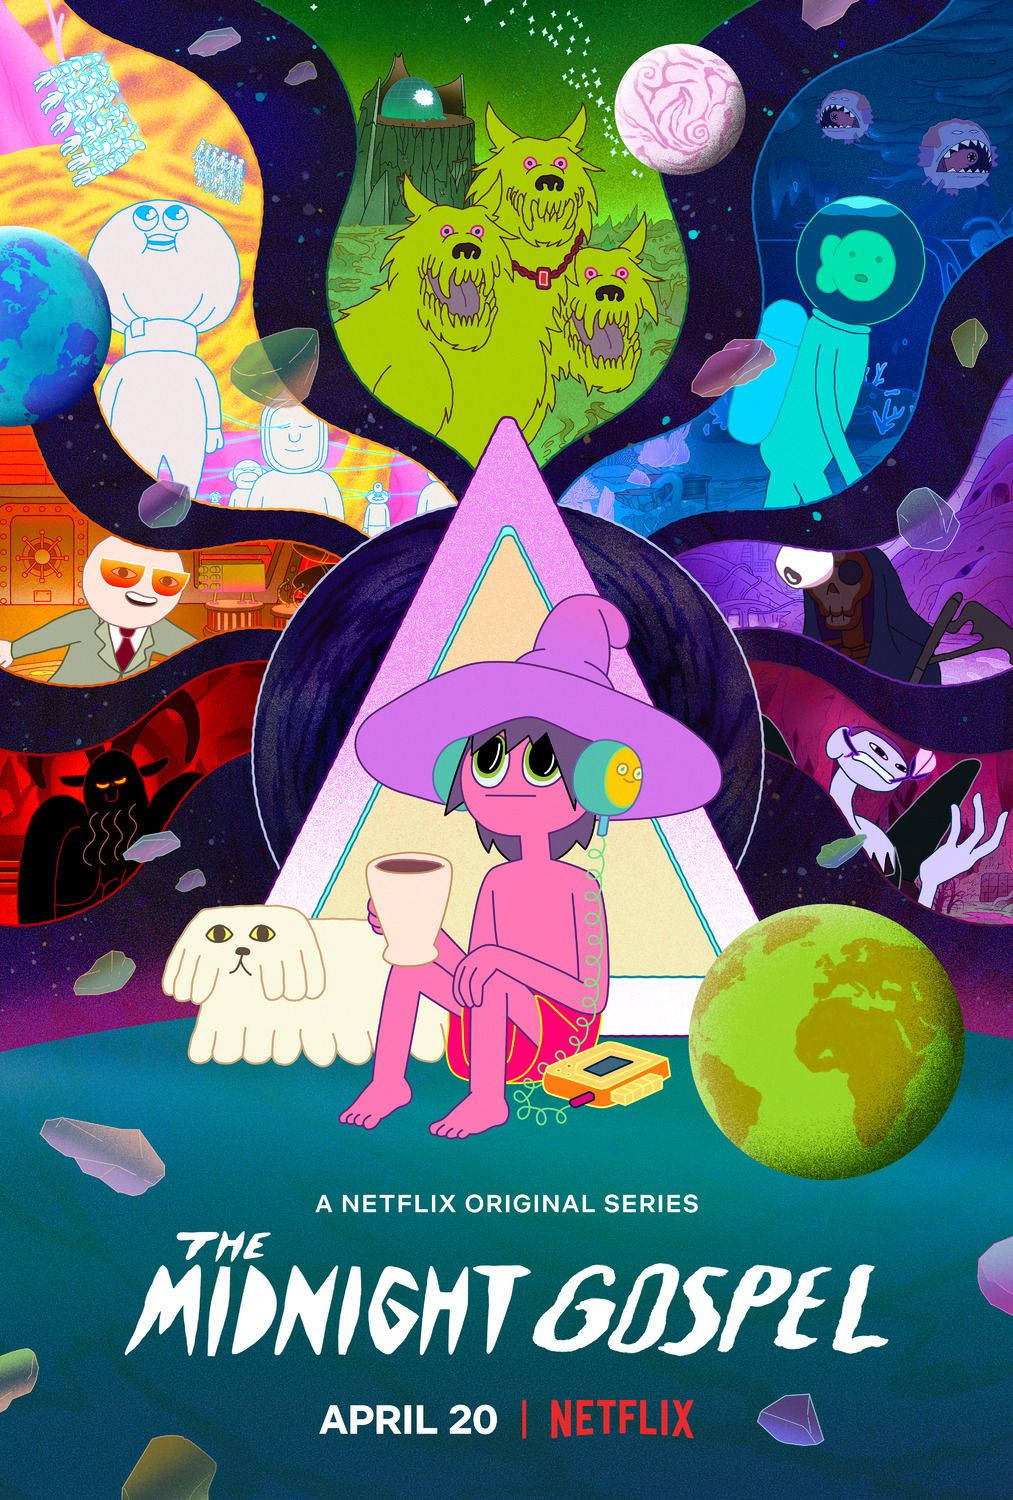 The Midnight Gospel Netflix Promotional Poster Background